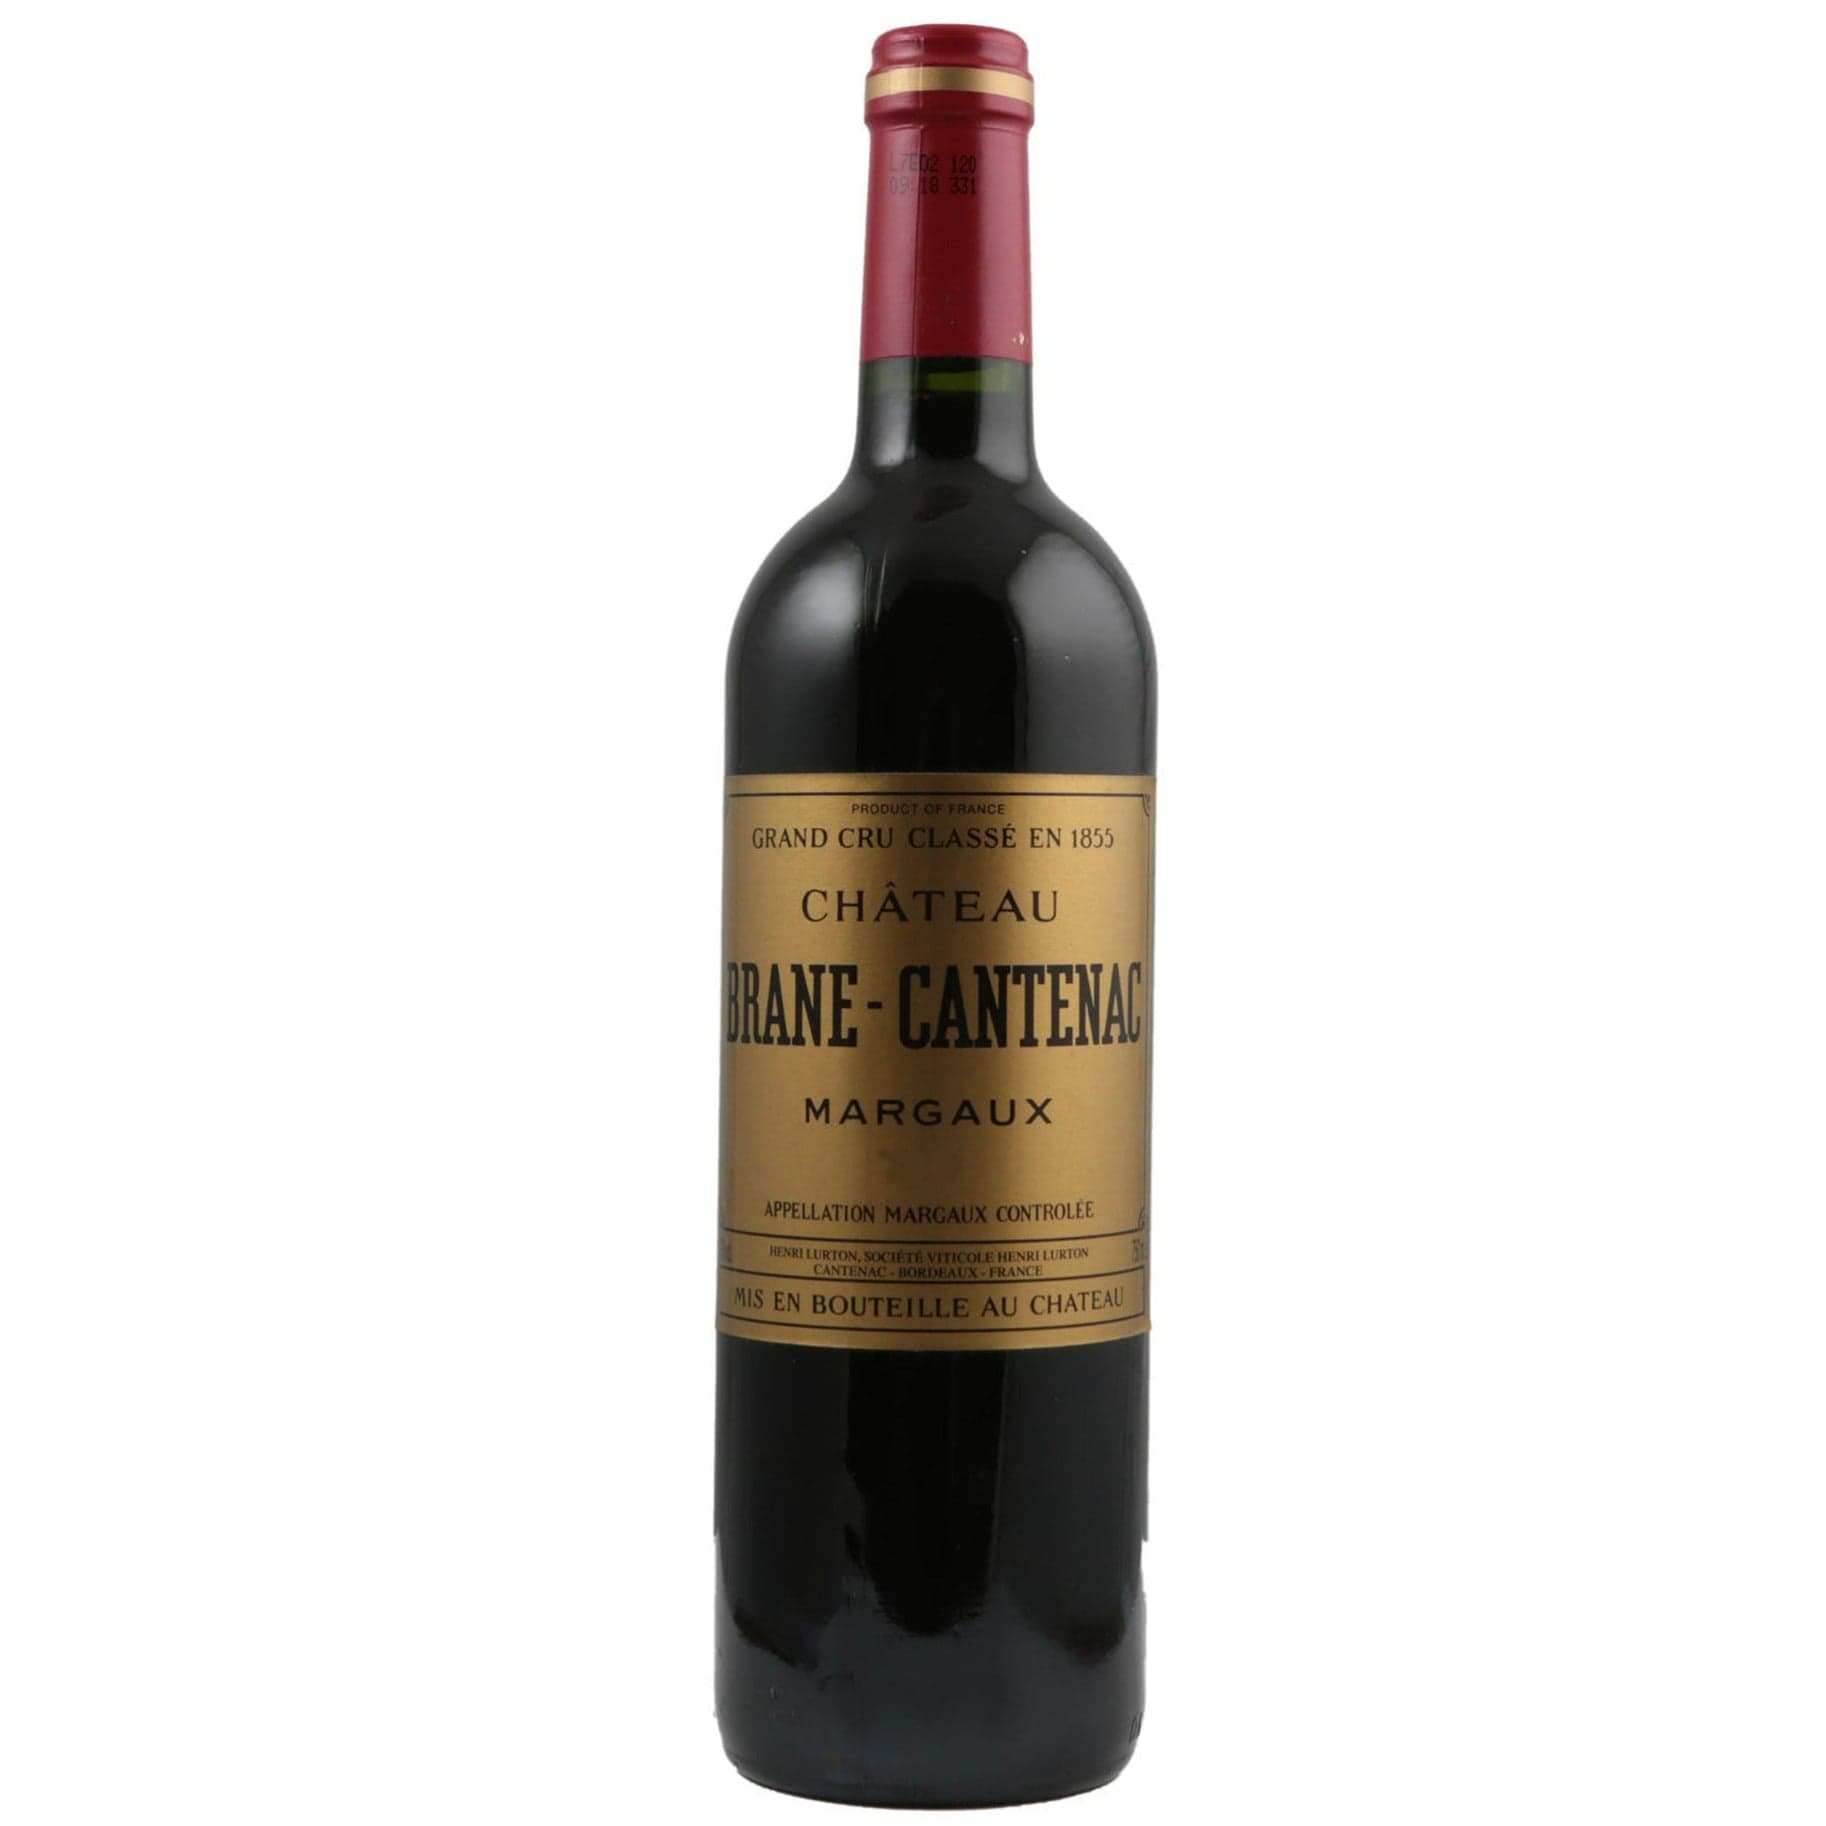 Single bottle of Red wine Ch. Brane-Cantenac, 2nd Growth Grand Cru Classe, Margaux, 2010 62% Cabernet Sauvignon, 30% Merlot & 8% Cabernet Franc